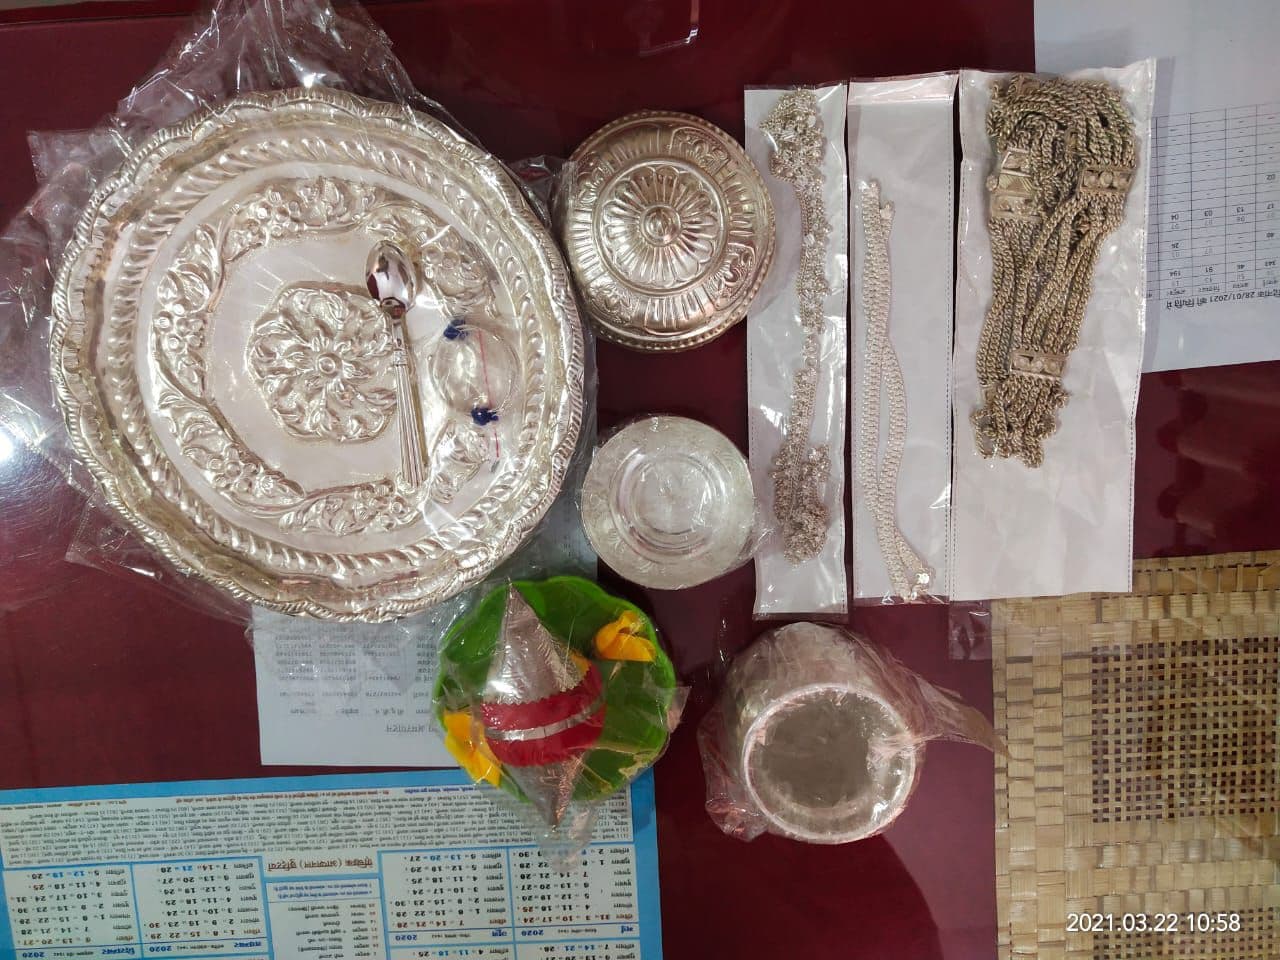 Silver ornaments found near four thieves - utensils